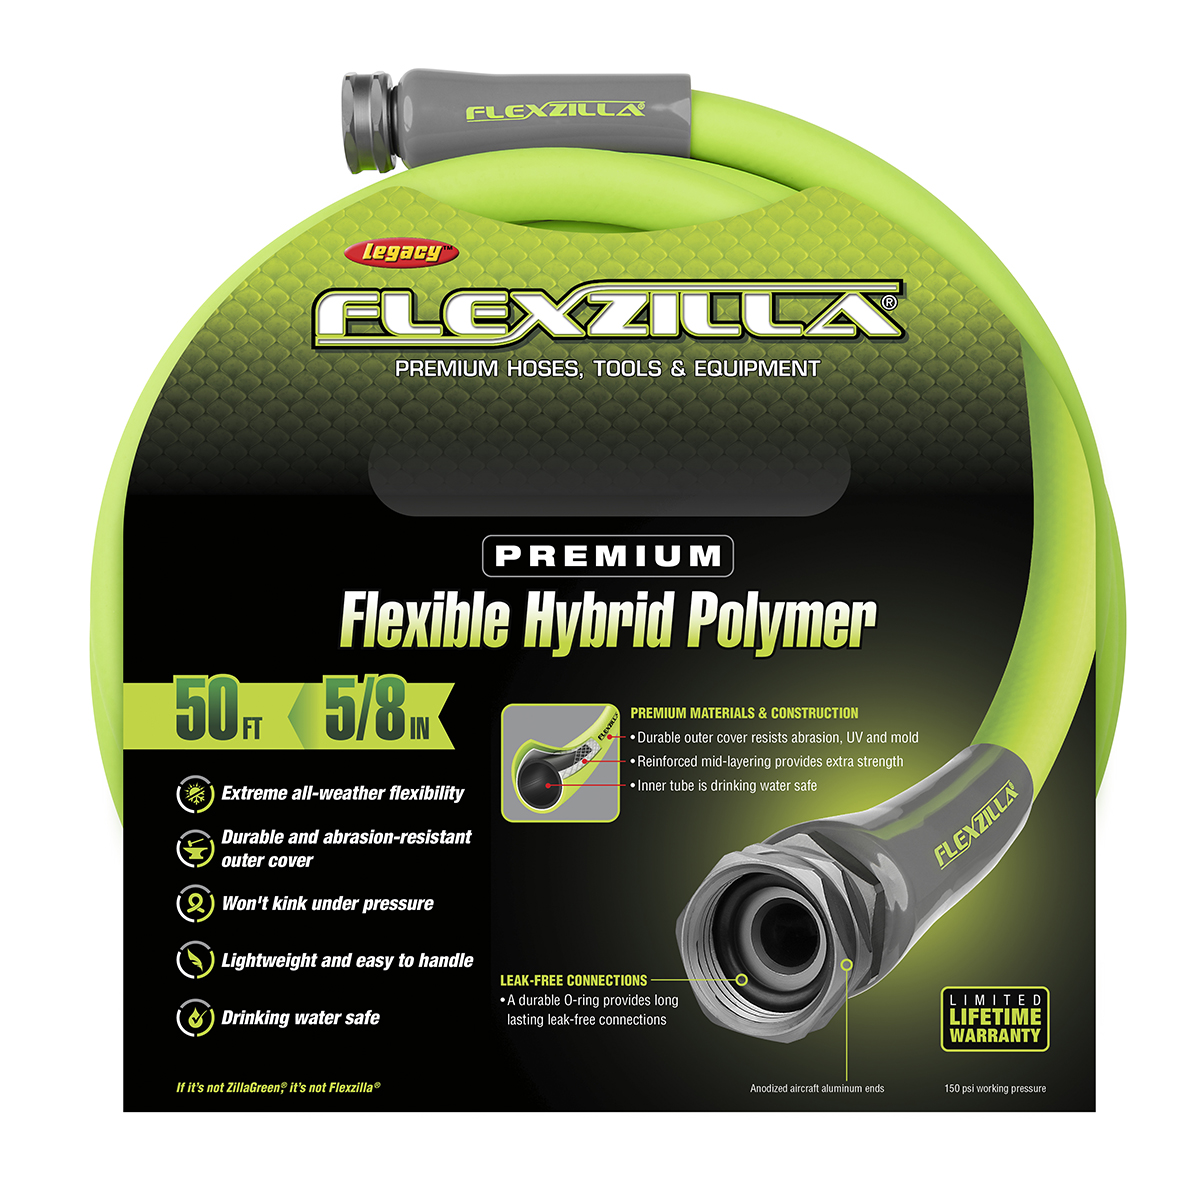 Flexzilla® Garden Hose, Flexible Hybrid Polymer, 5/8" x 50' - image 3 of 12